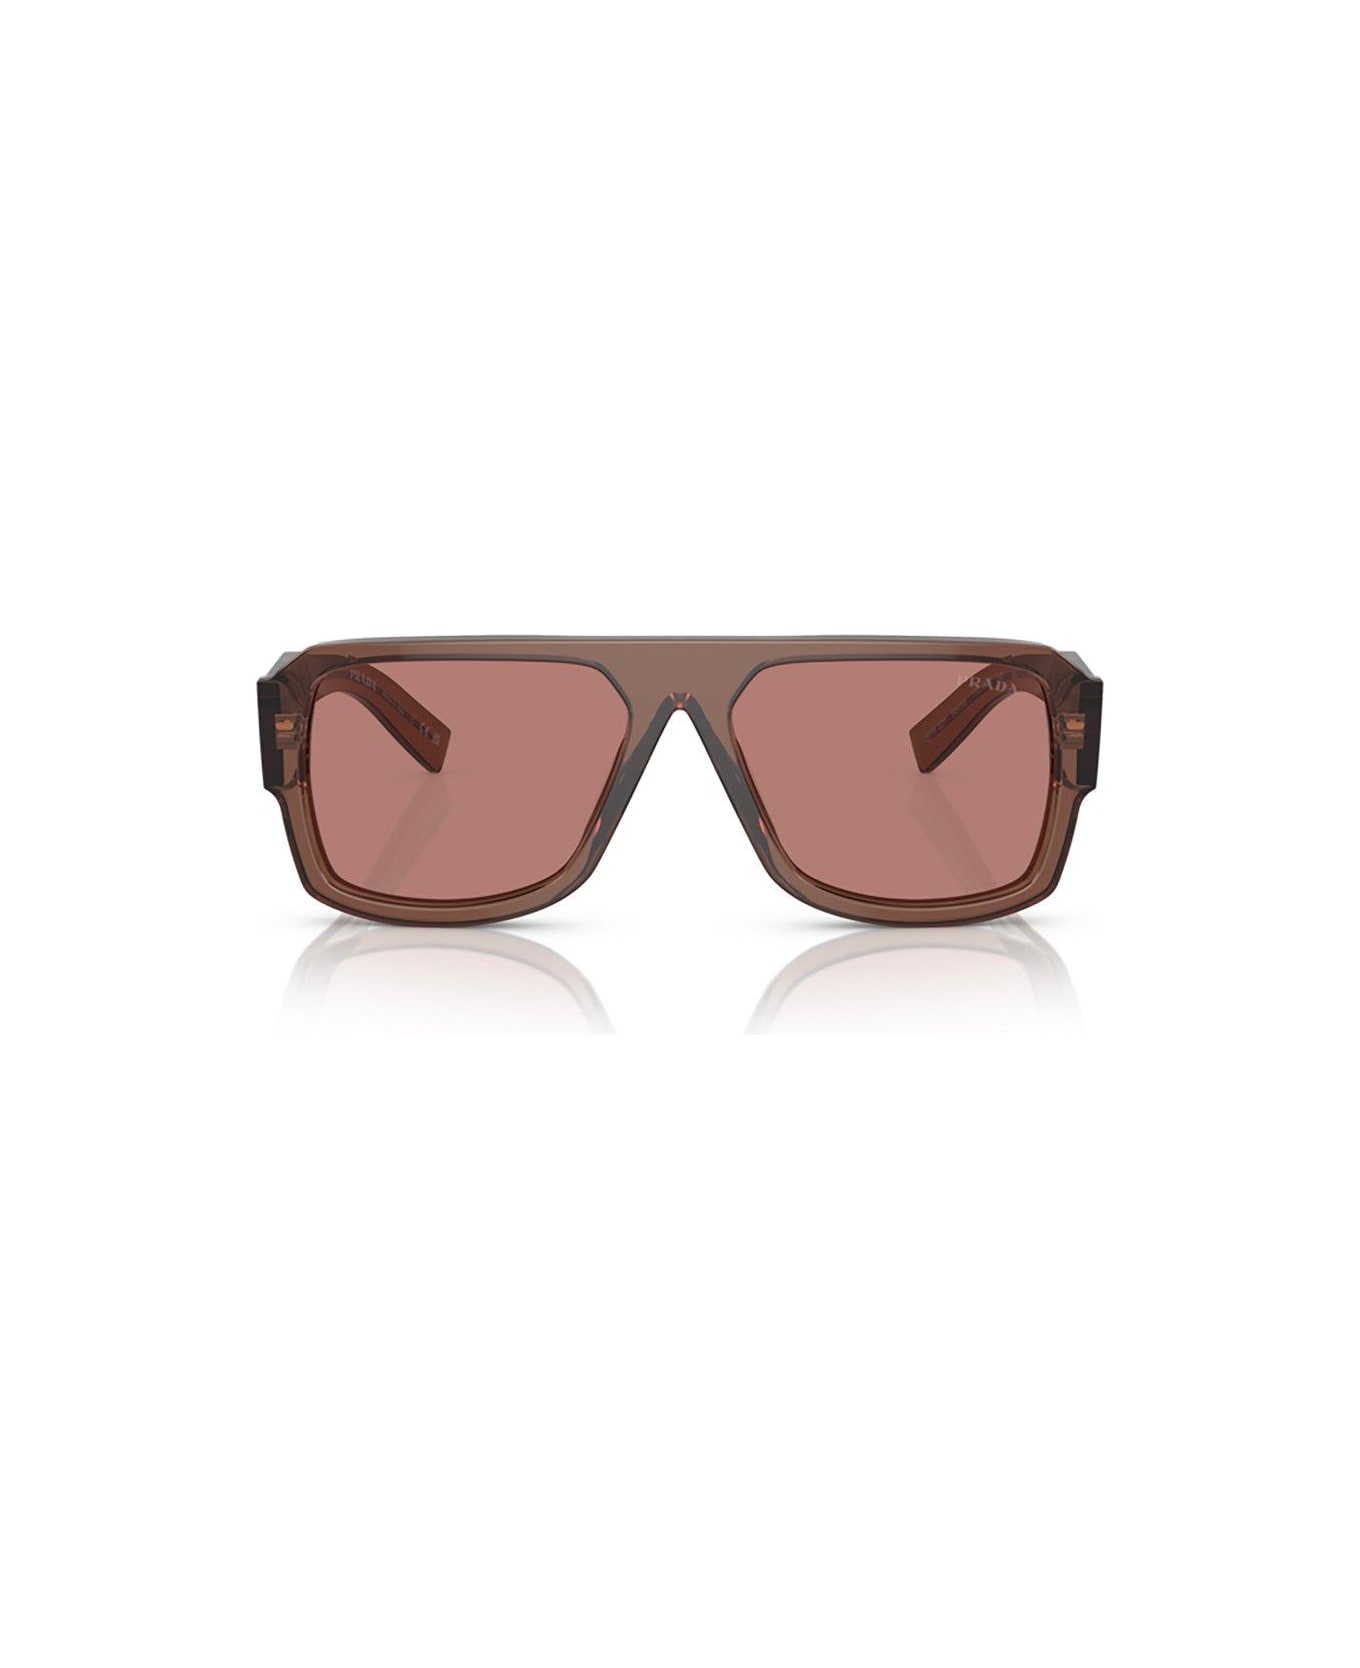 Prada Eyewear Rectangular Frame Sunglasses Sunglasses - 17O60B Transparent Brown